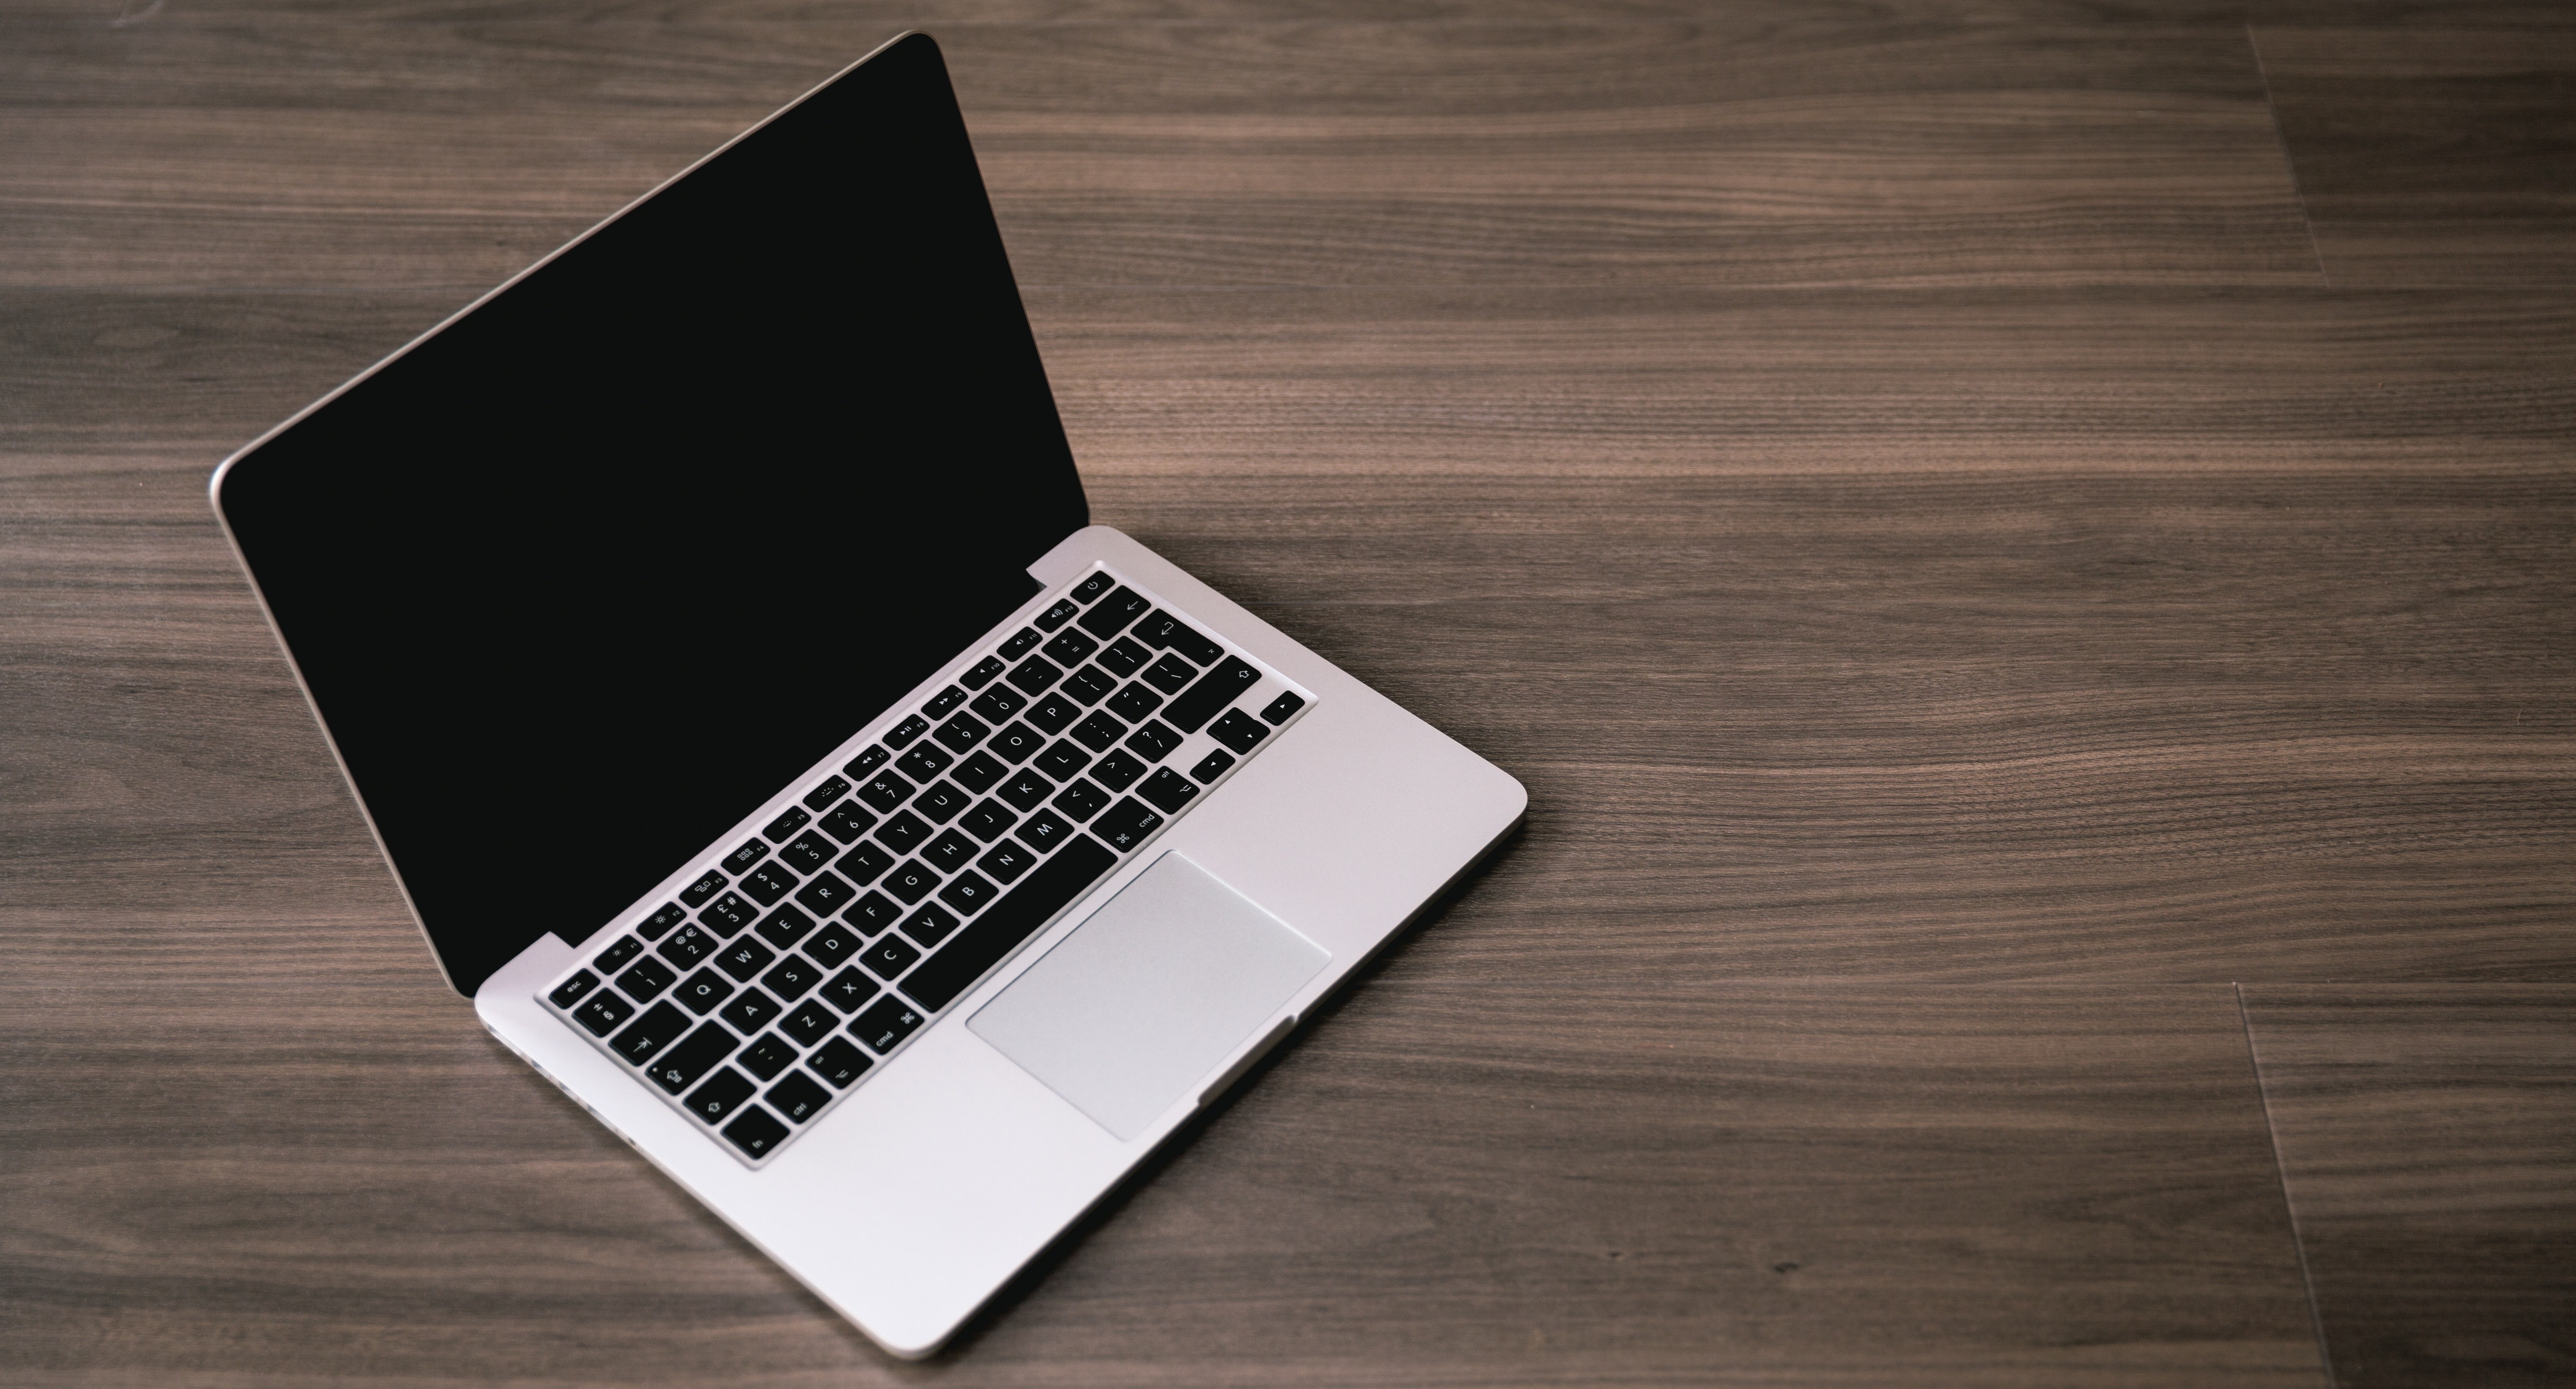 Share a job - win a MacBook